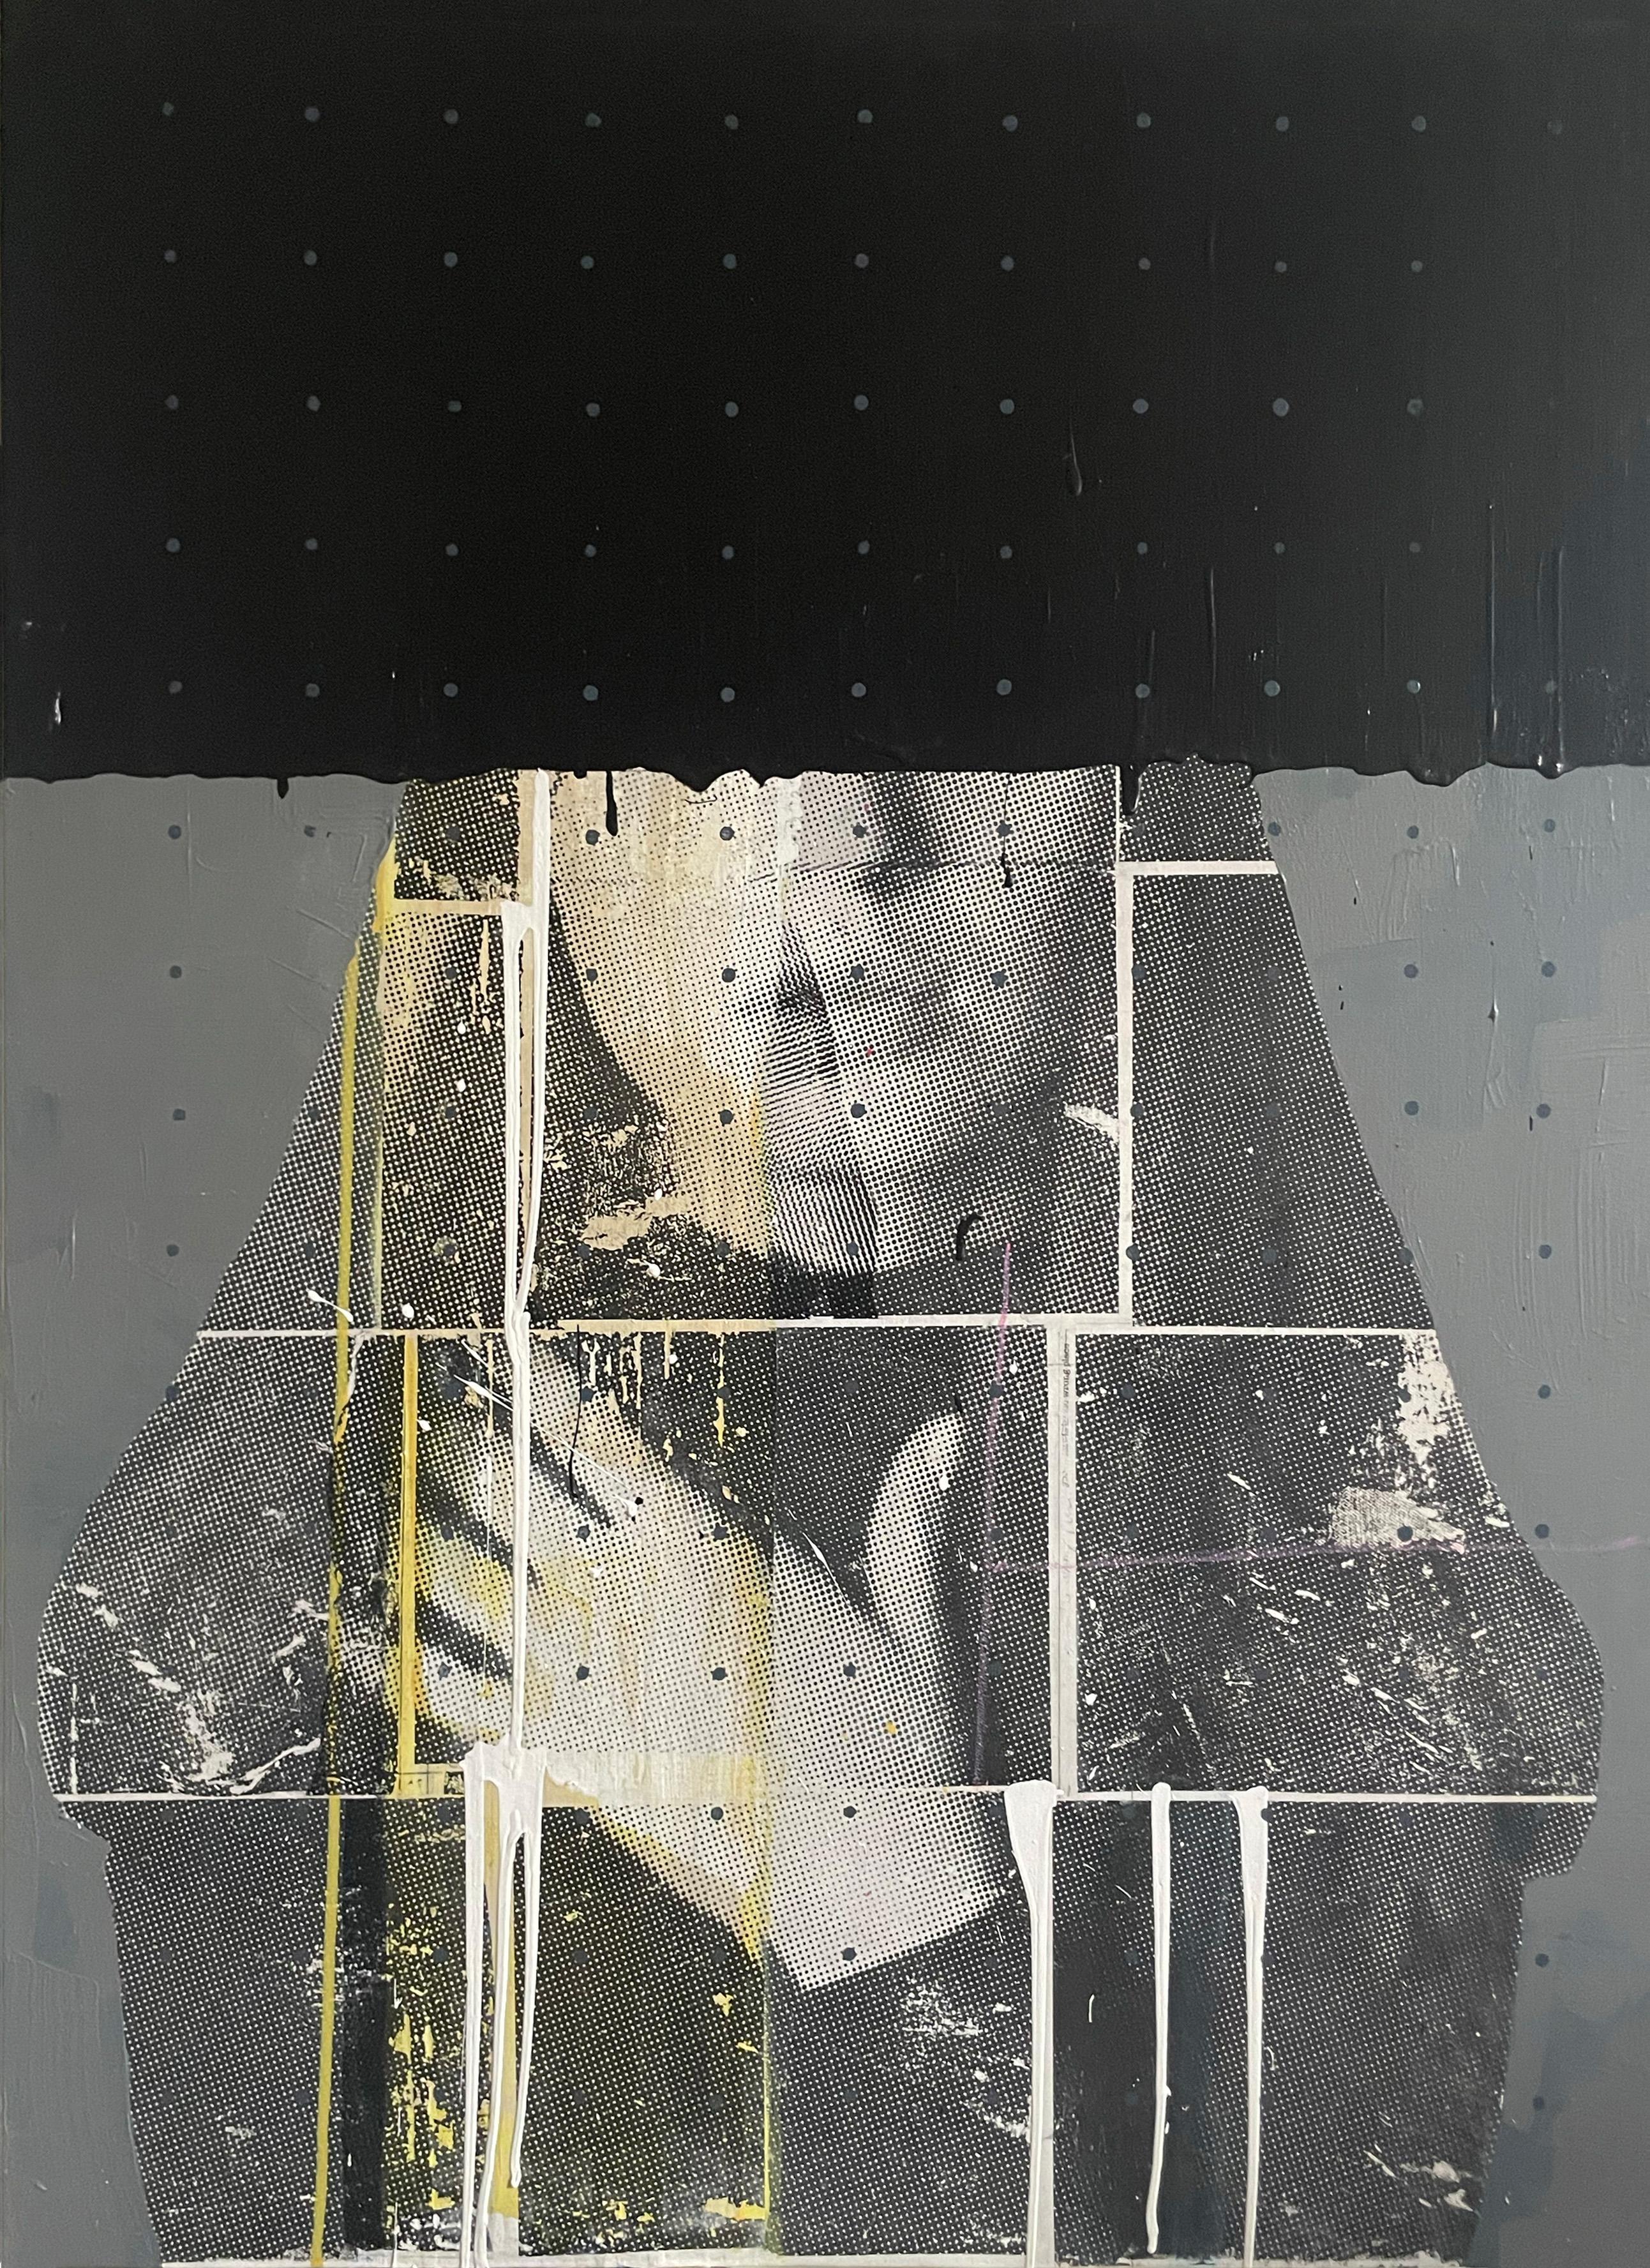 Fragmentos, Collage. Portrait Mixed Media. - Mixed Media Art by Roberto Fonfria